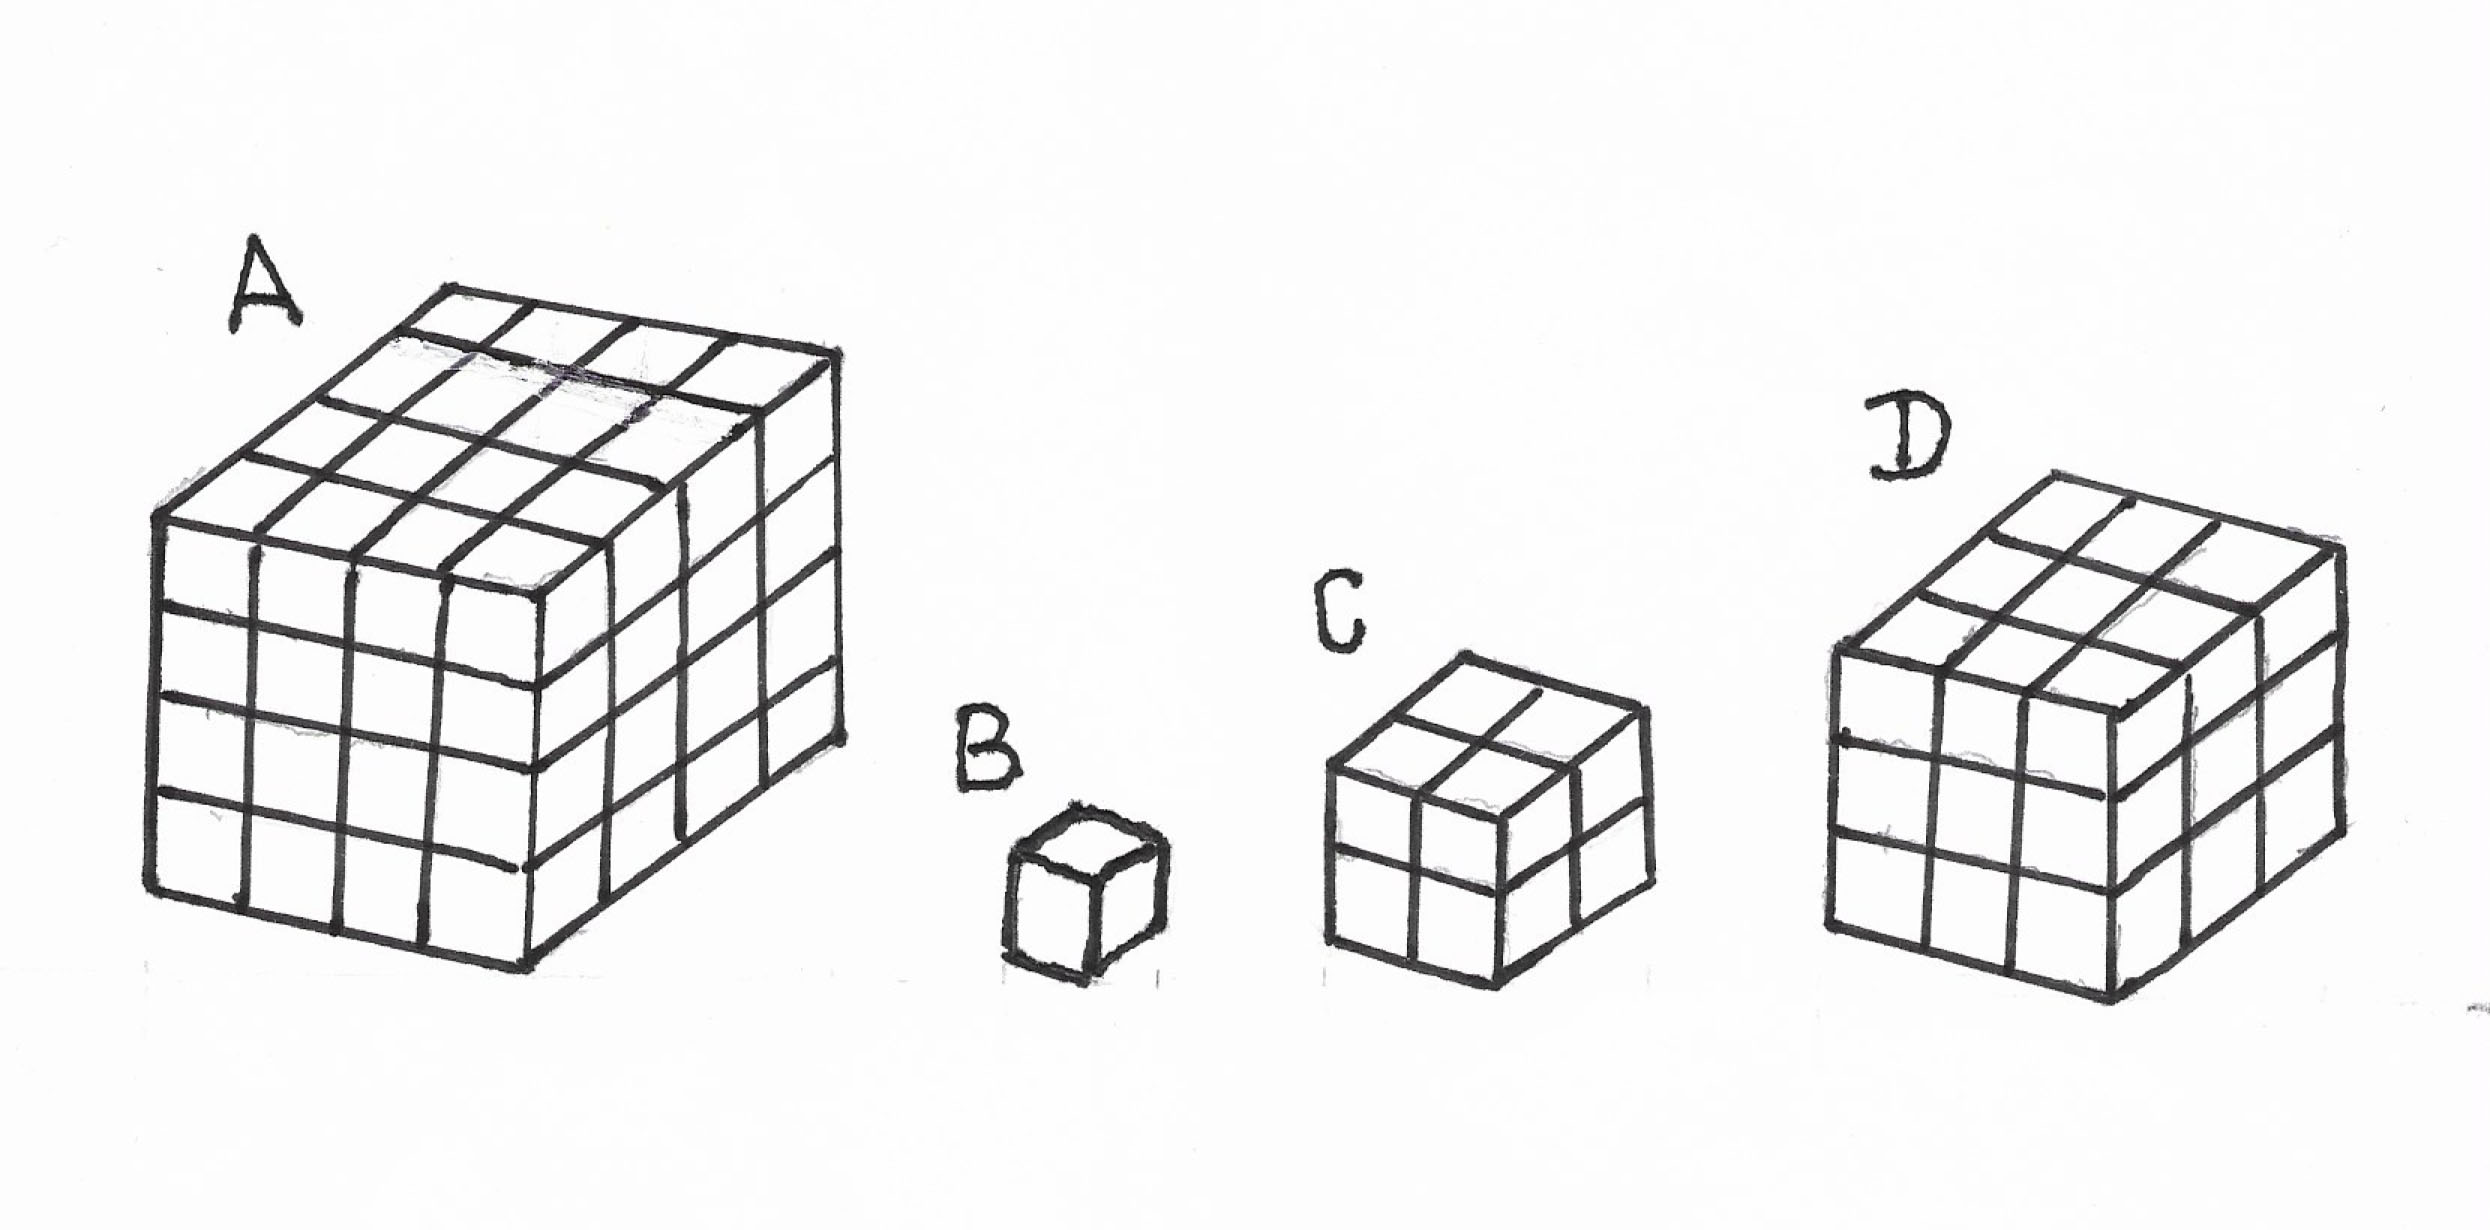 Из одинаковых кубиков изобразили стороны. Фигуры из одинаковых кубиков. Игральный кубик развертка. Из одинаковых кубиков изобразили стороны коробки. Алгоритм собирания кубика Рубика 3x3.